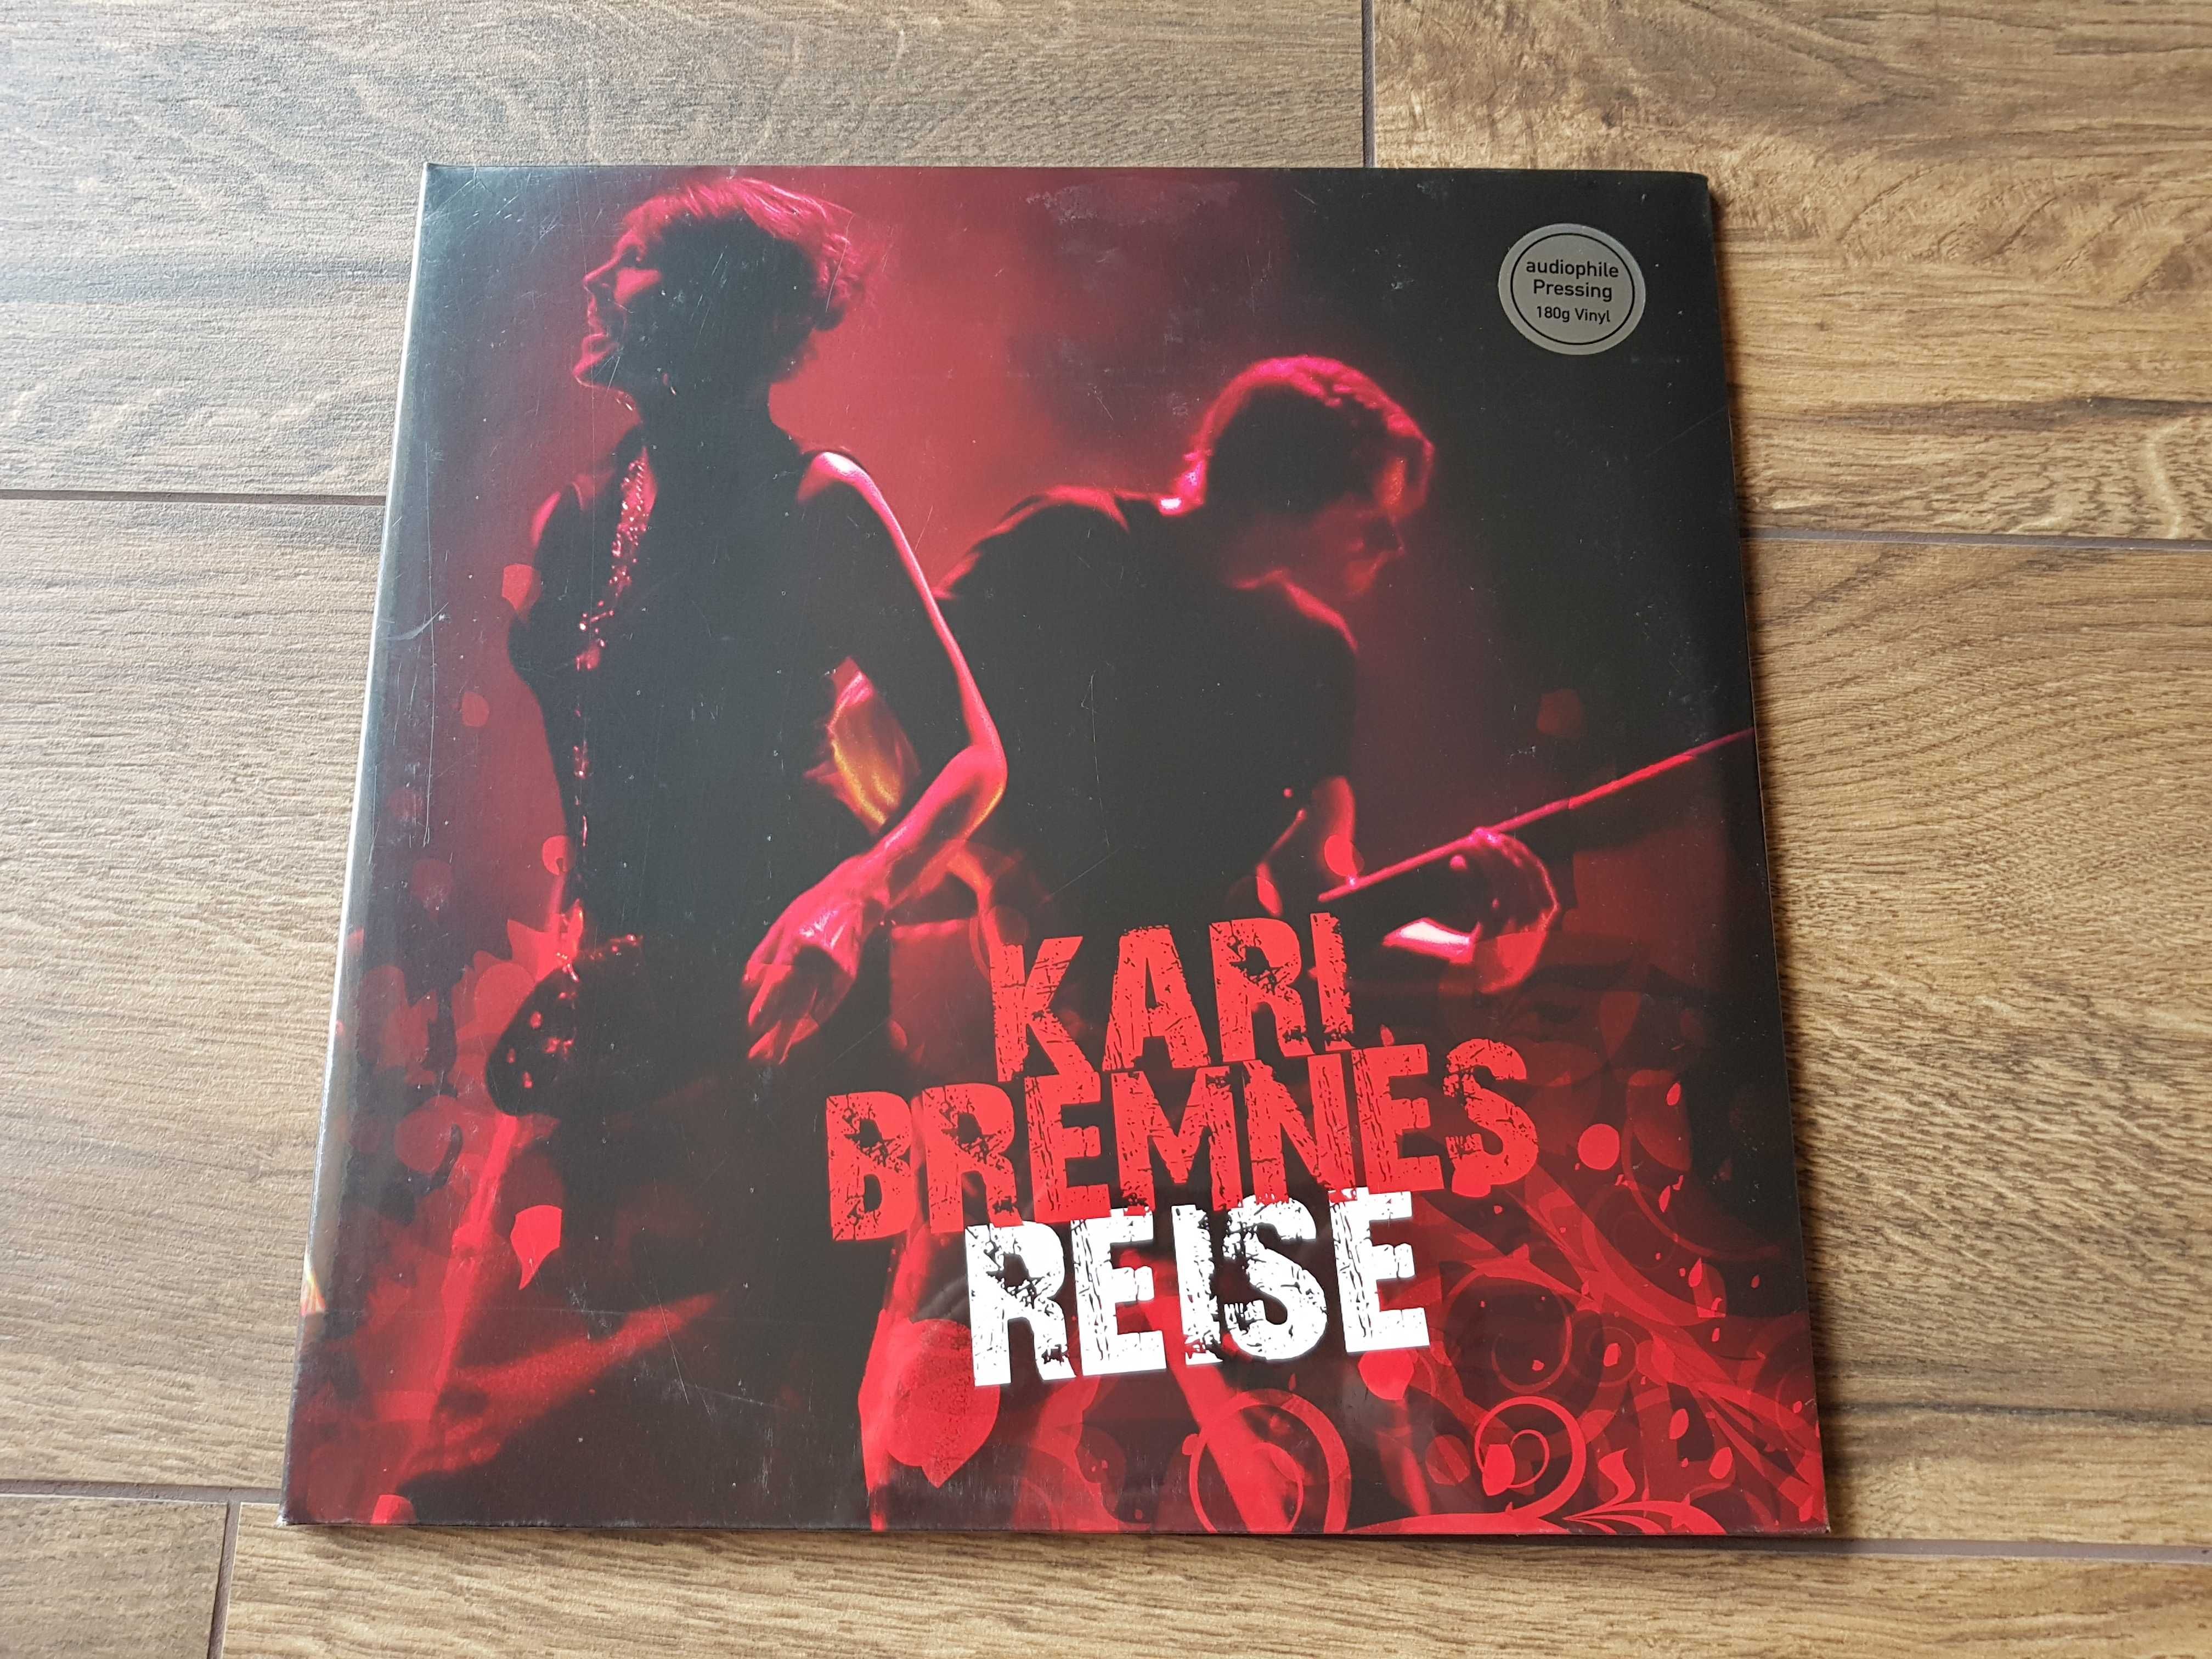 LP, NOWA płyta winylowa Kari BREMNES - Reise, audiphile pressing !!!